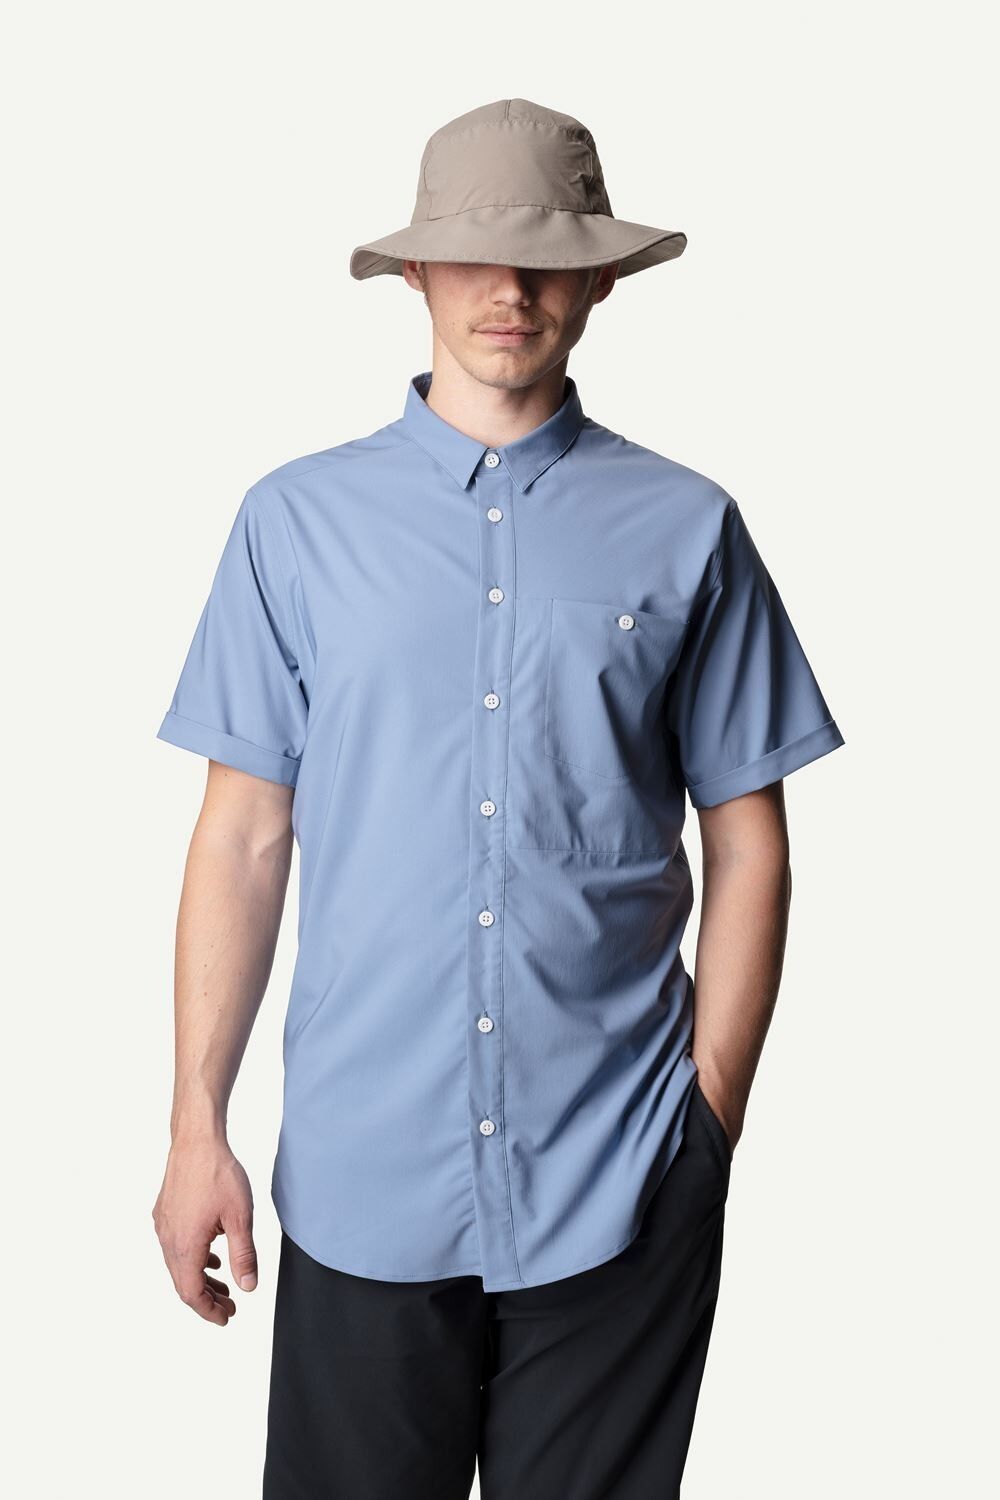 Houdini Shortsleeve Shirt, skjorte herre Up In The Blue 267594 XL 2019